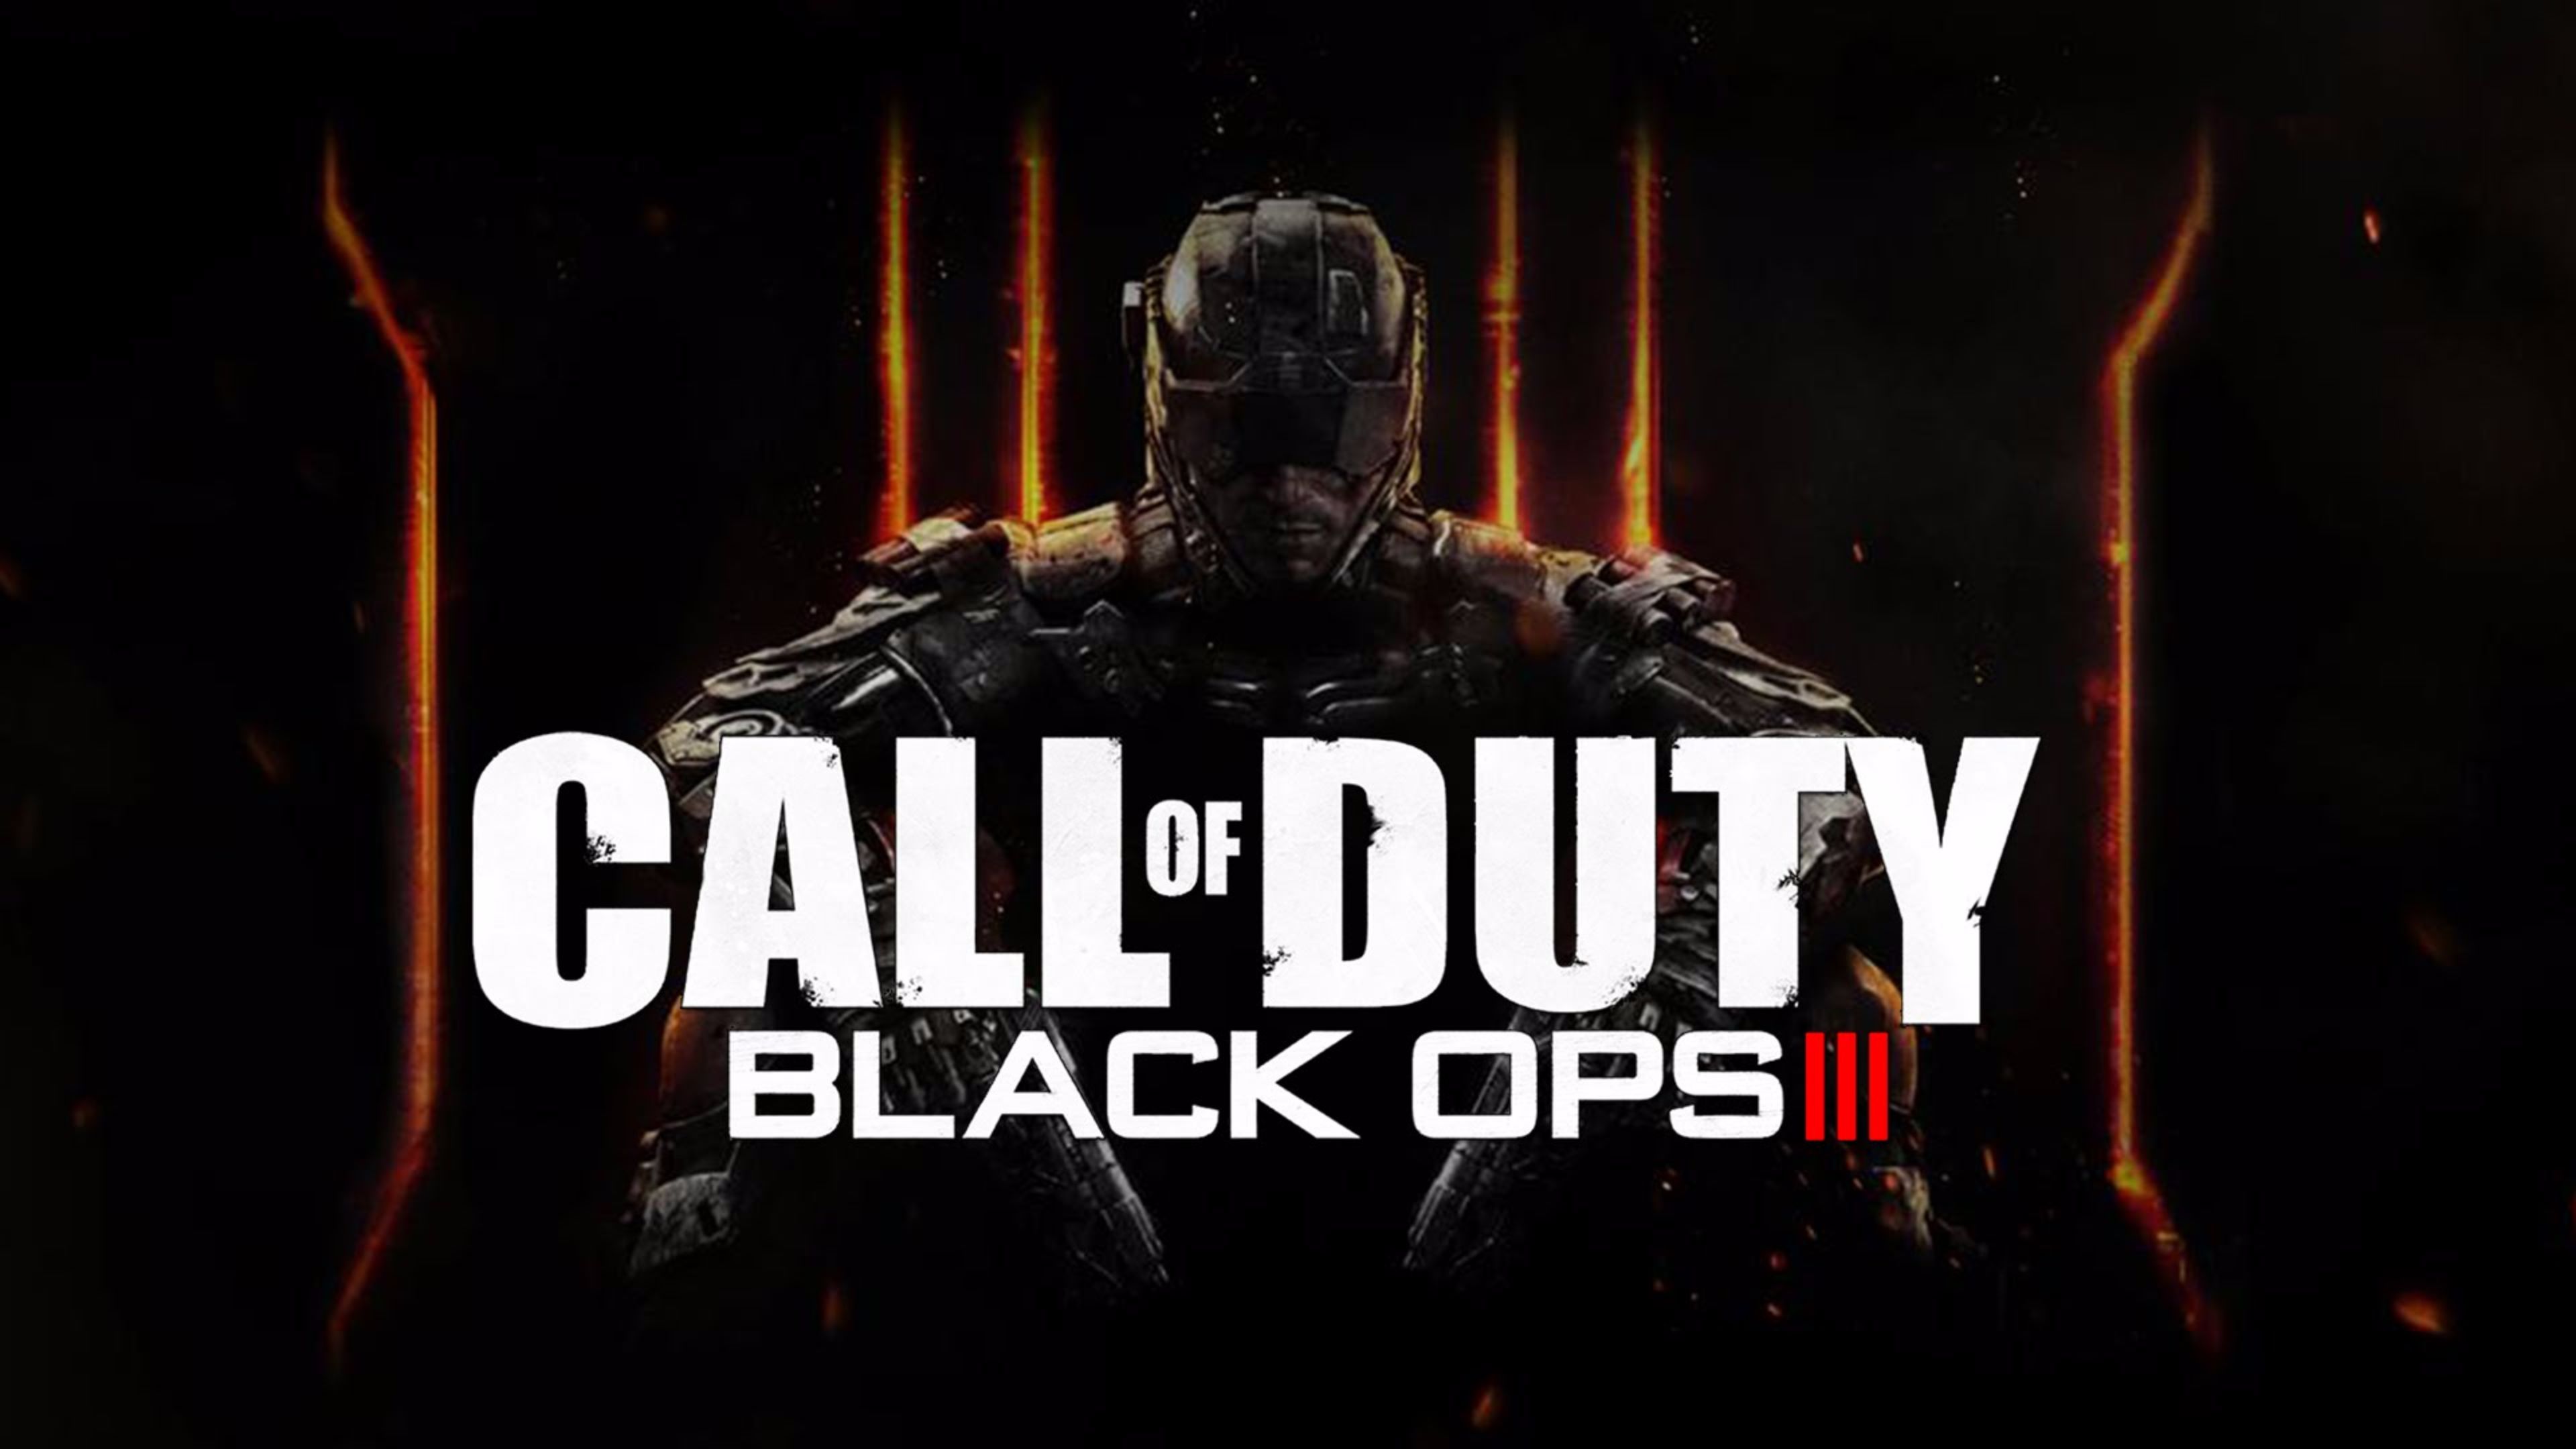 Inspired Call of Duty Black Ops 3 4K Wallpaper | Free 4K Wallpaper